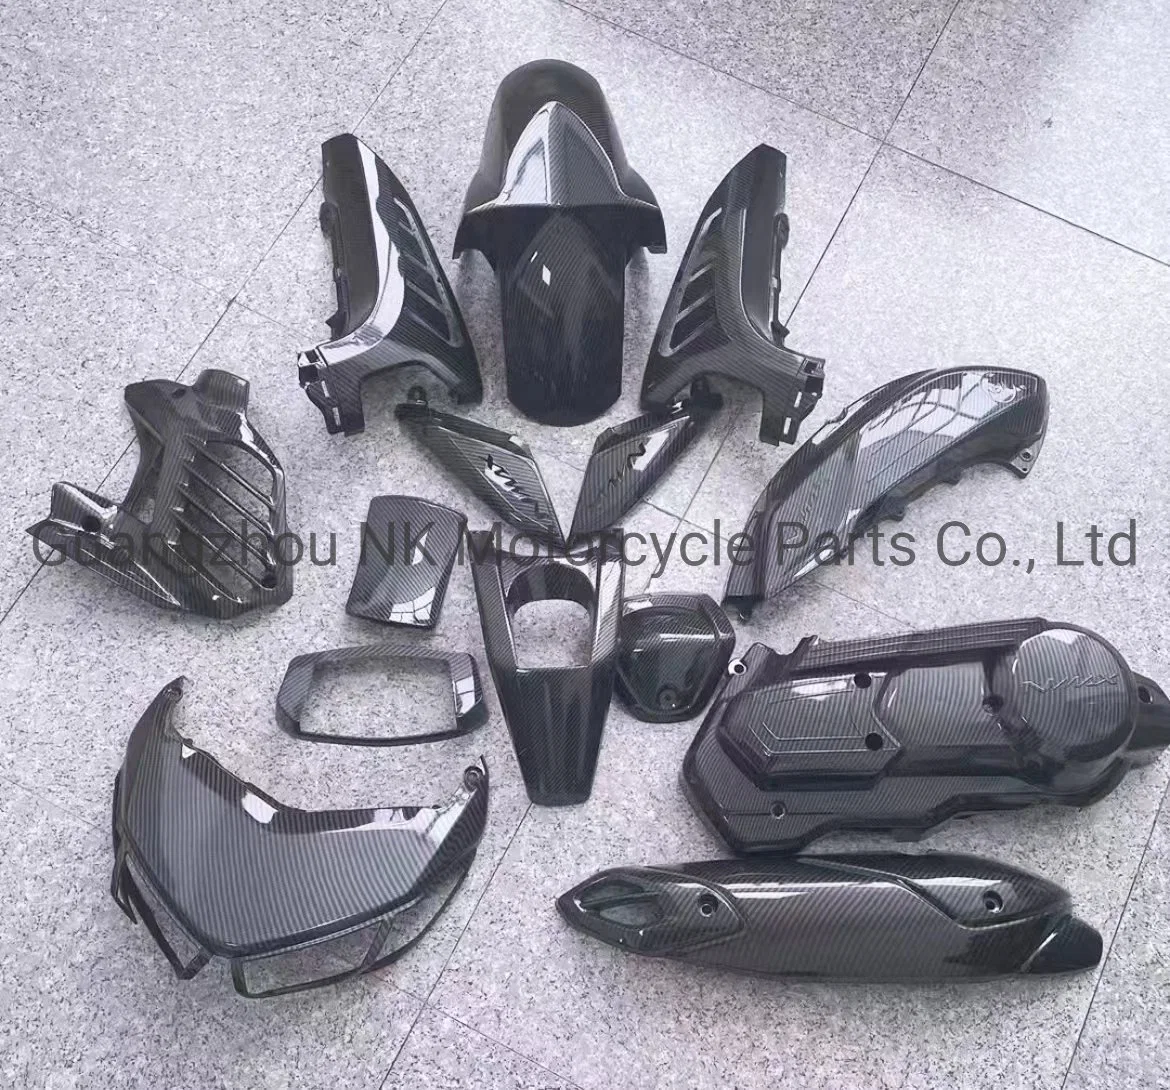 Nk YAMAHA Honda Suzuki Racing Motorcycle Parts Accessories for Nmax155/Mio/R15V3/Pcx/Nvx155/Aerox155/Y15zr/Exciter150/Sniper150/Pcx150/Sniper150/Nvx155